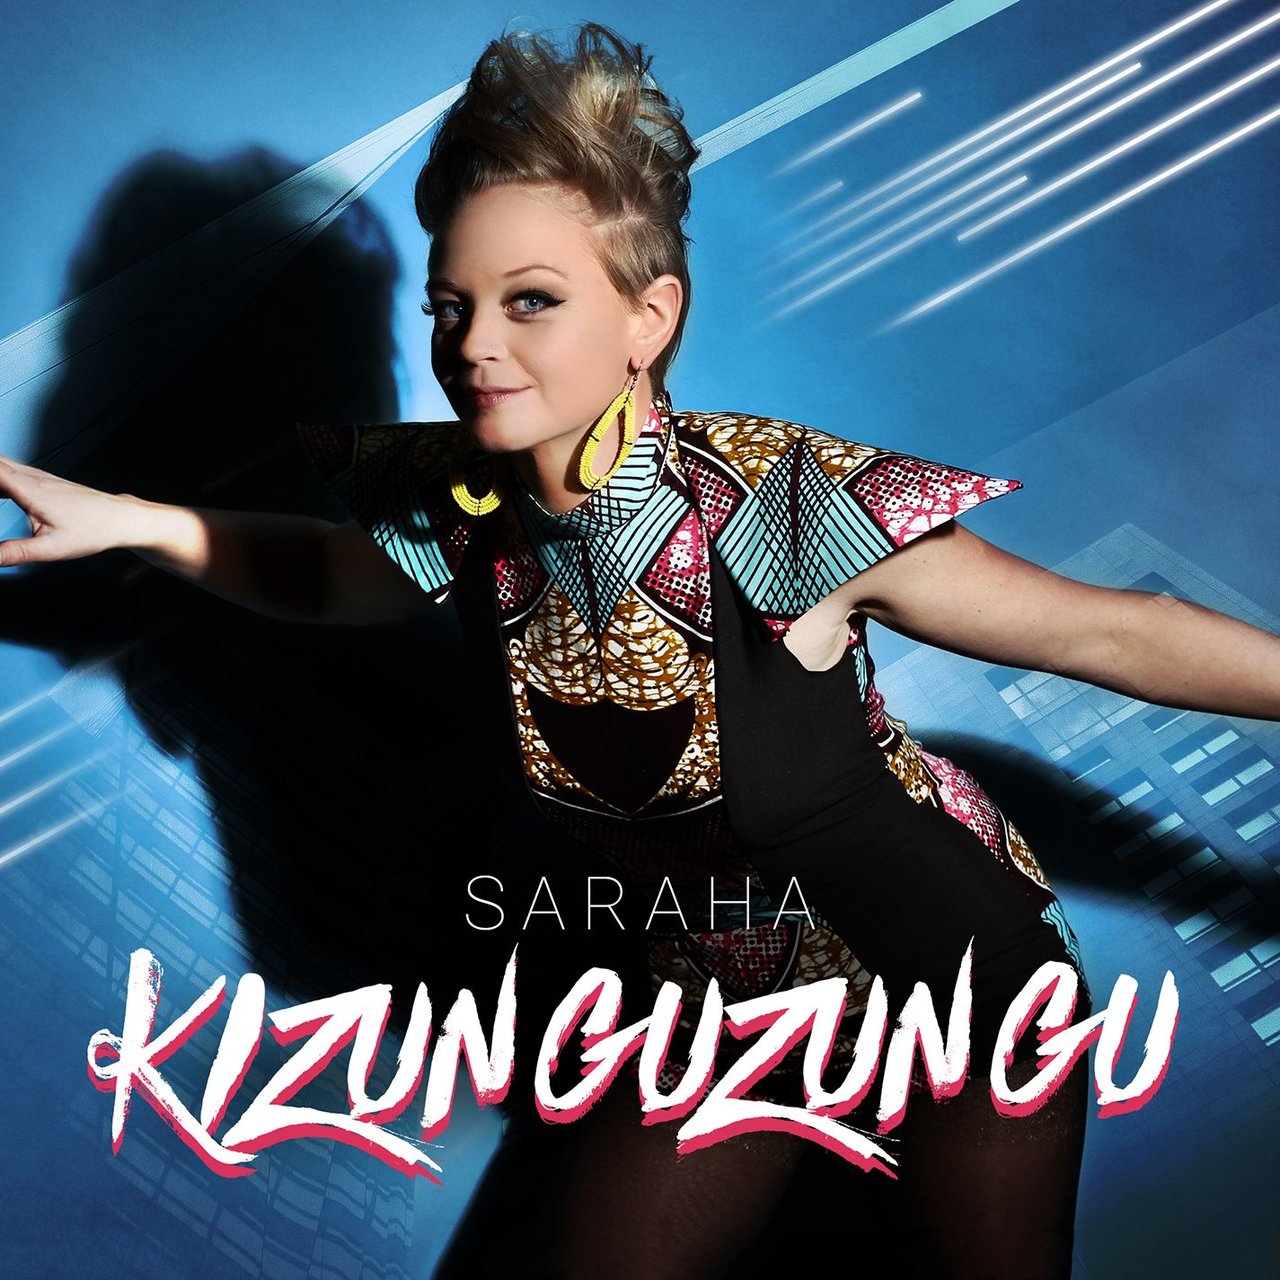 SaRaha Kizunguzungu cover artwork